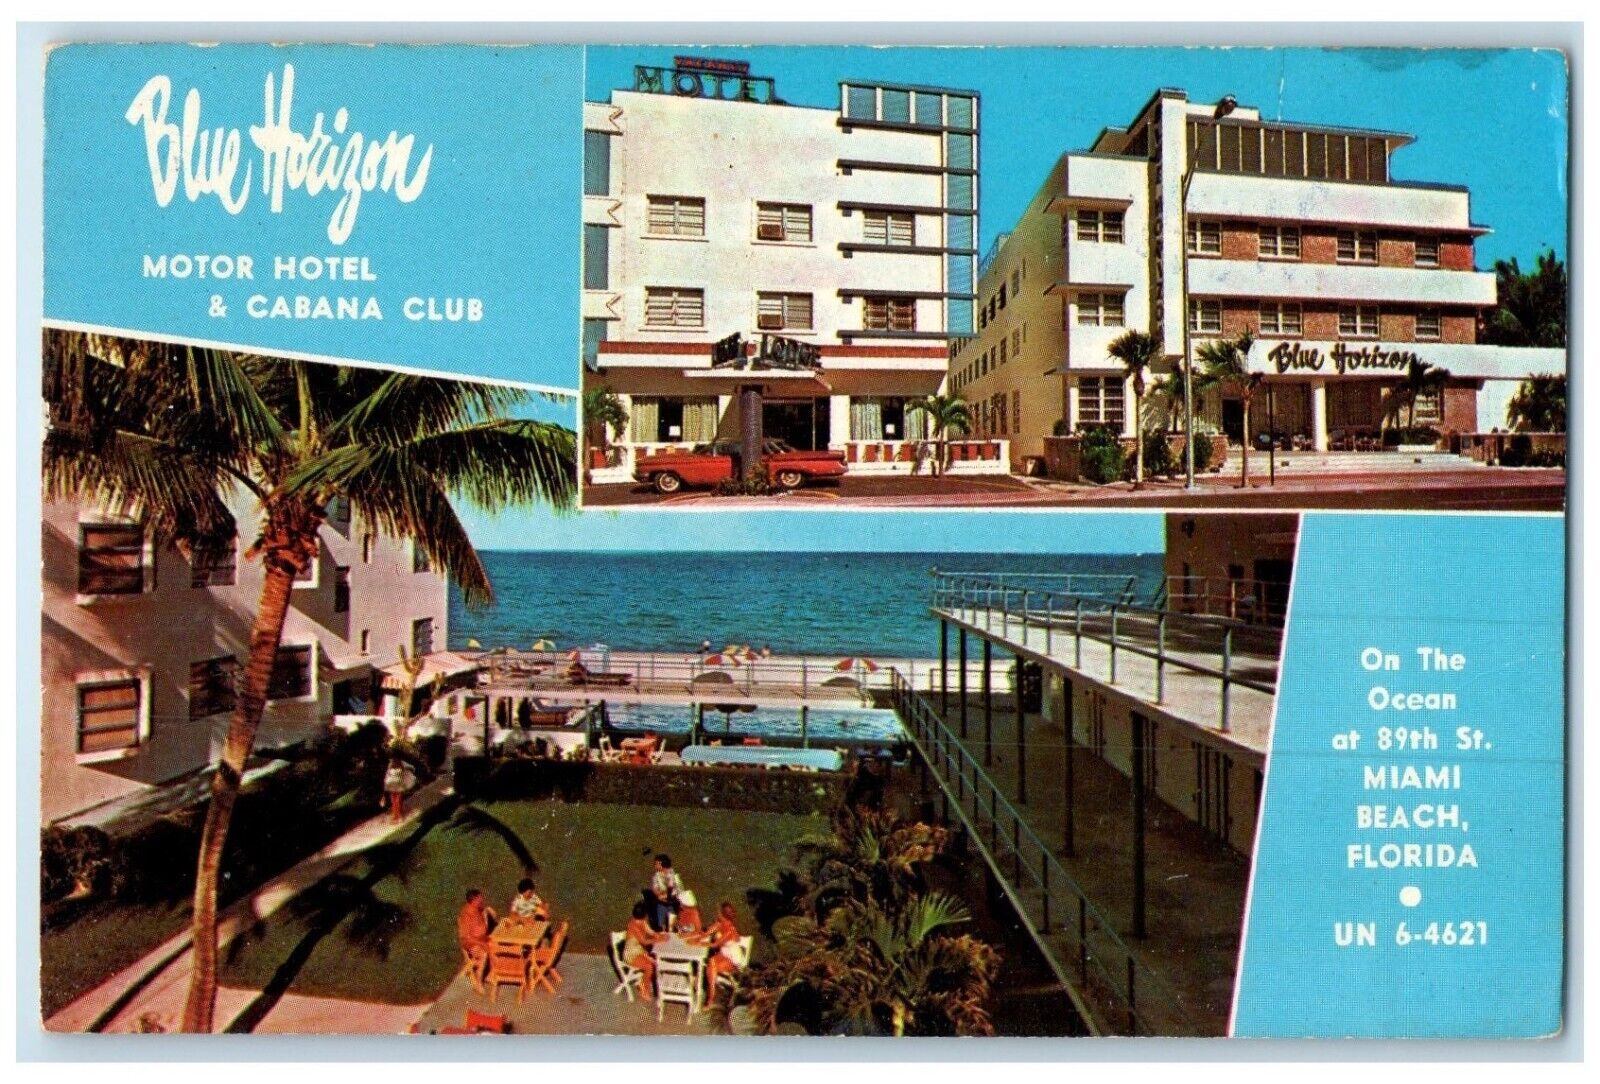 c1960 Blue Horizon Motor Hotel Cabana Club Exterior Miami Beach Florida Postcard